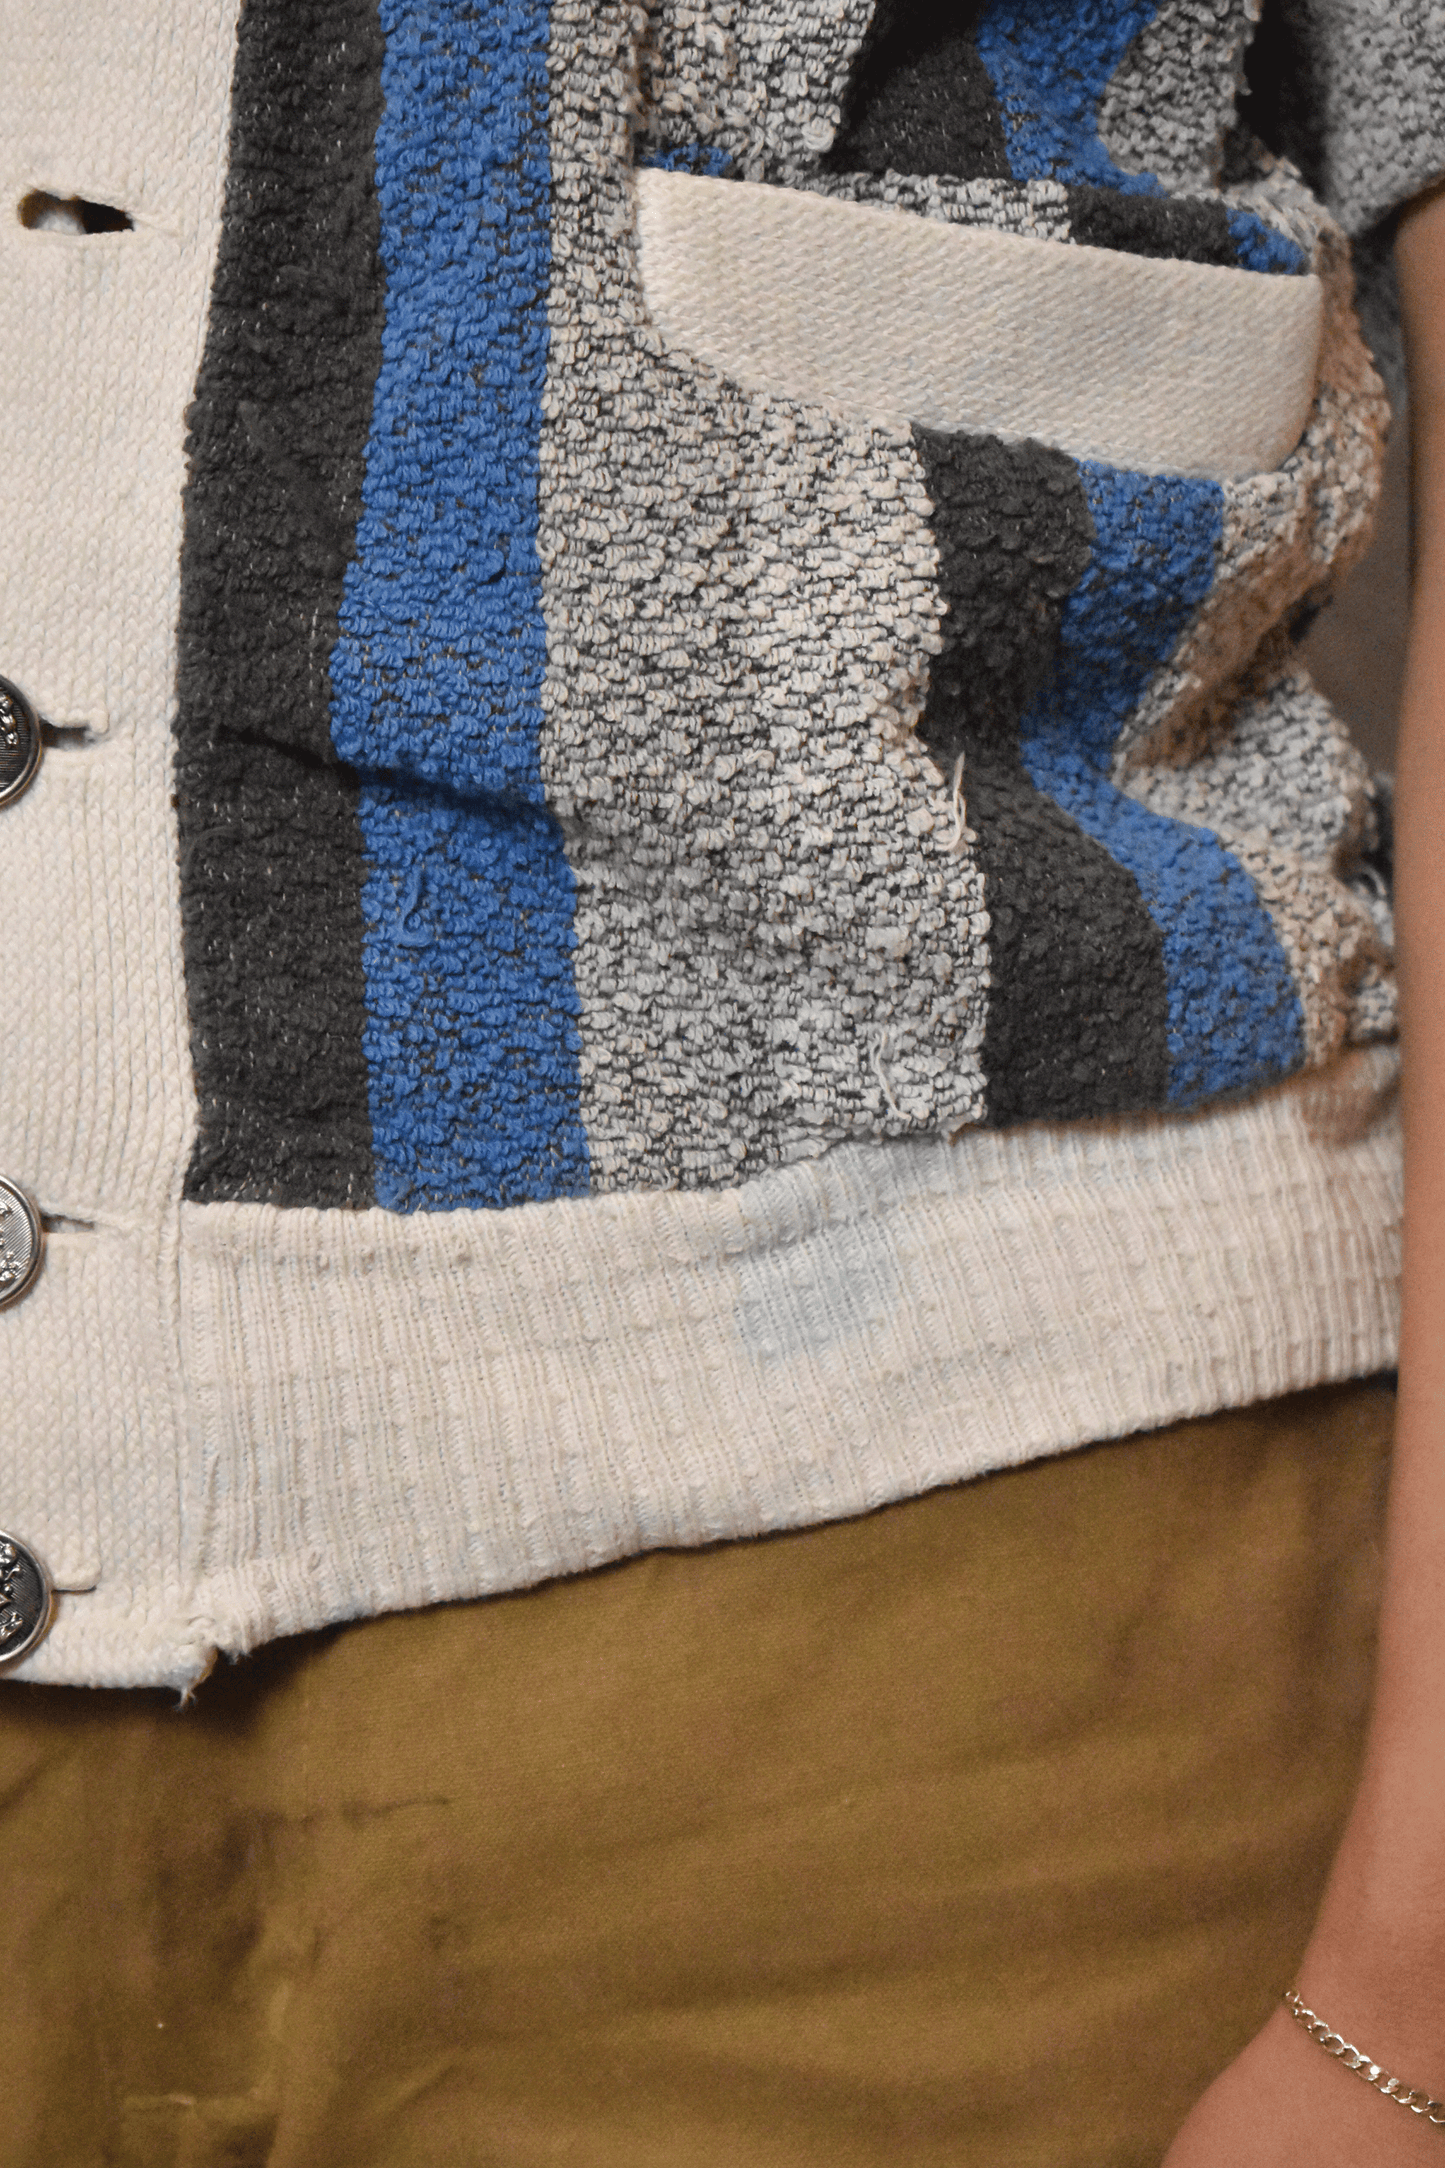 Vintage 1960s "Roytex" Striped Short Sleeve Towel Textured Cardigan